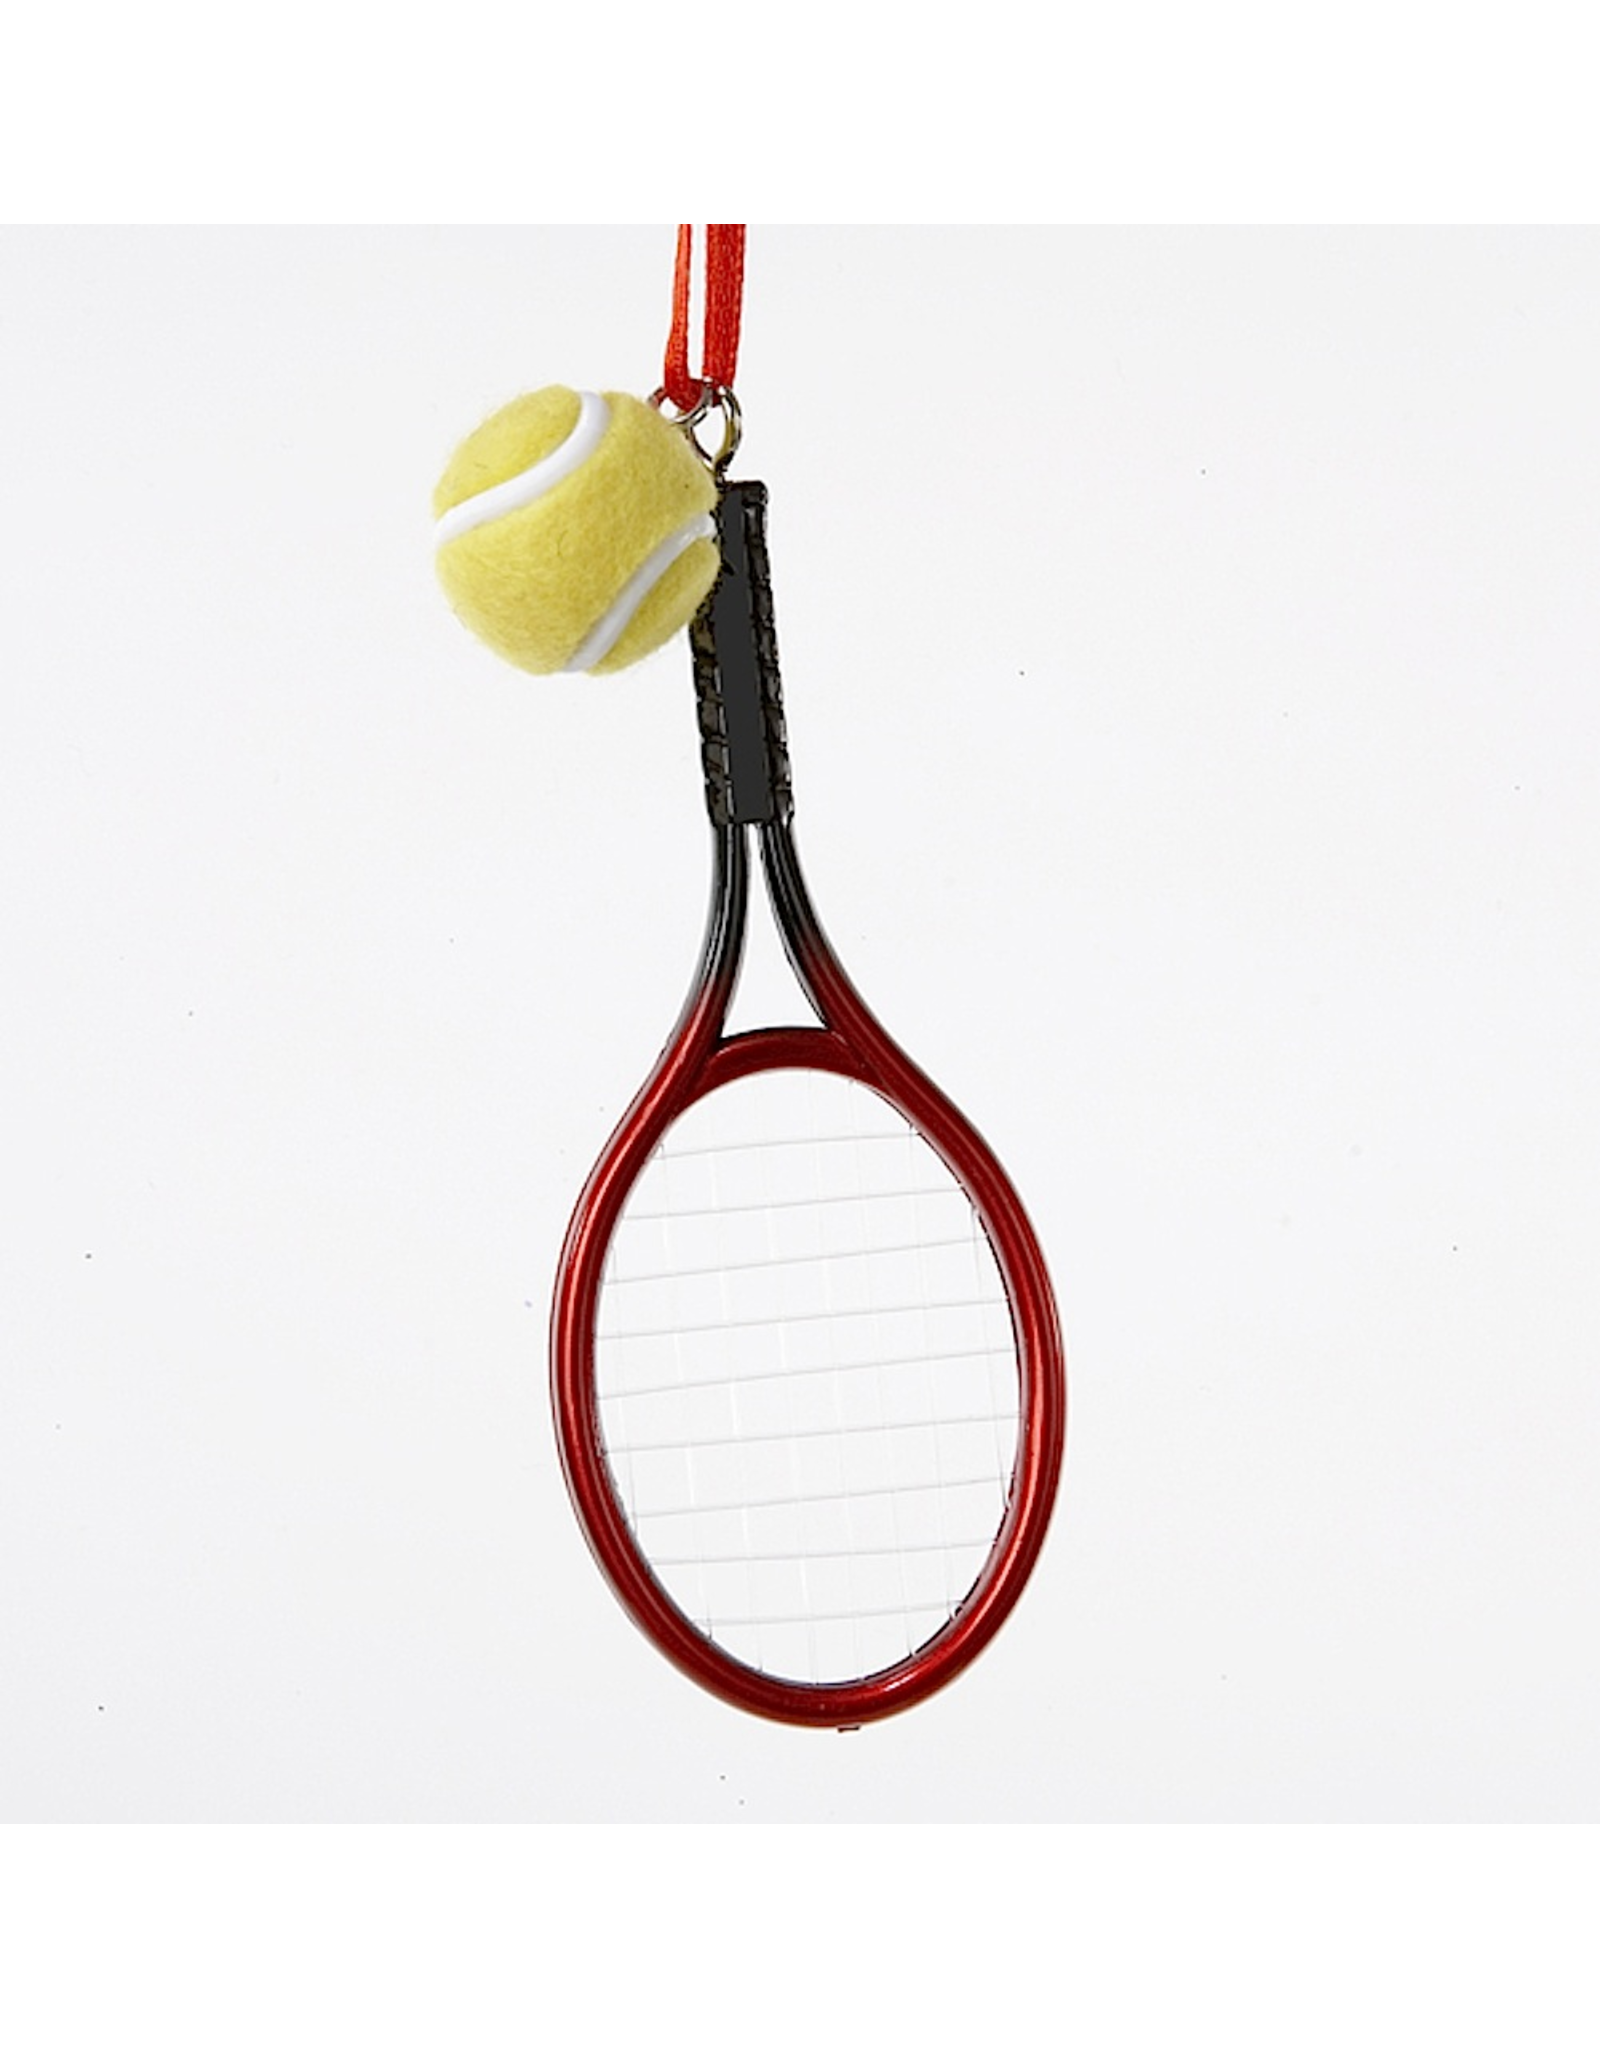 Kurt Adler Tennis Racket With Tennis Ball Christmas Ornament 4 inch